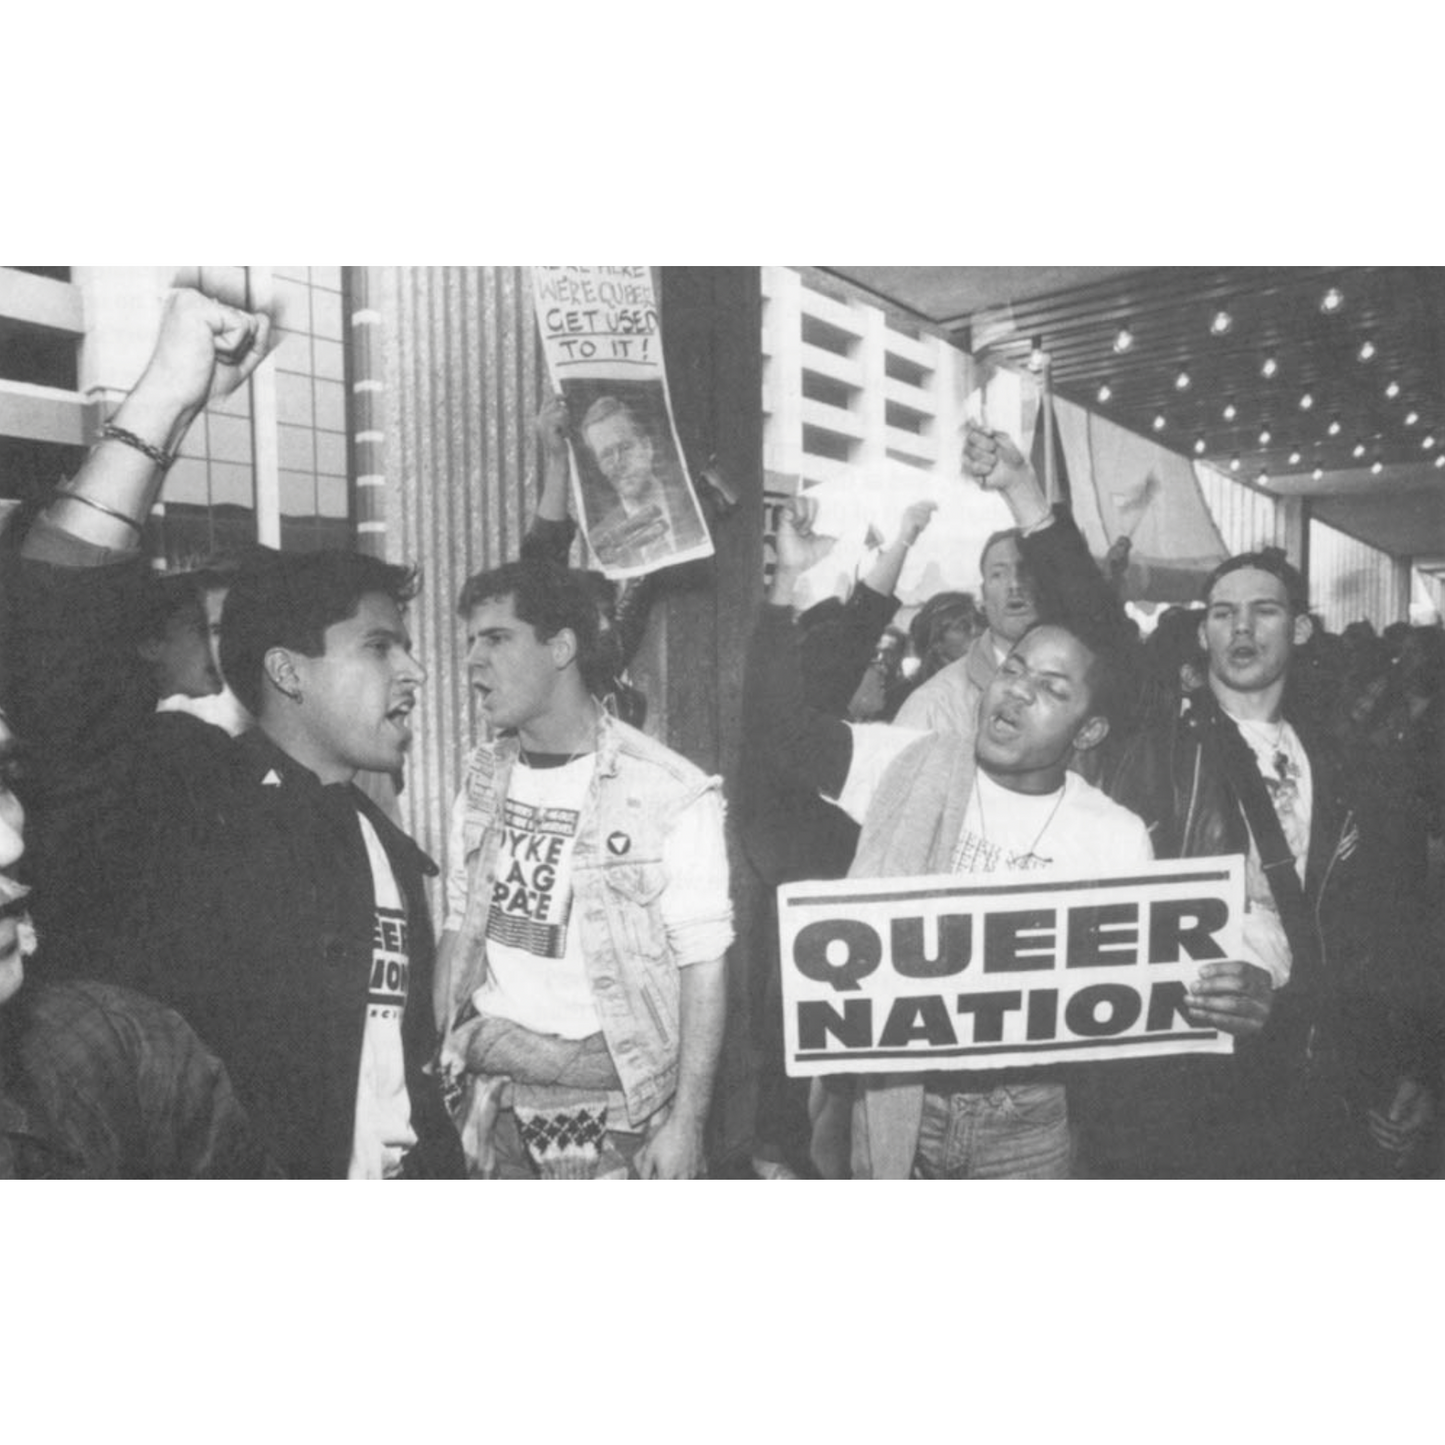 Queer Nation - Vinyl Decal Sticker - 4-in - Mellow Monkey